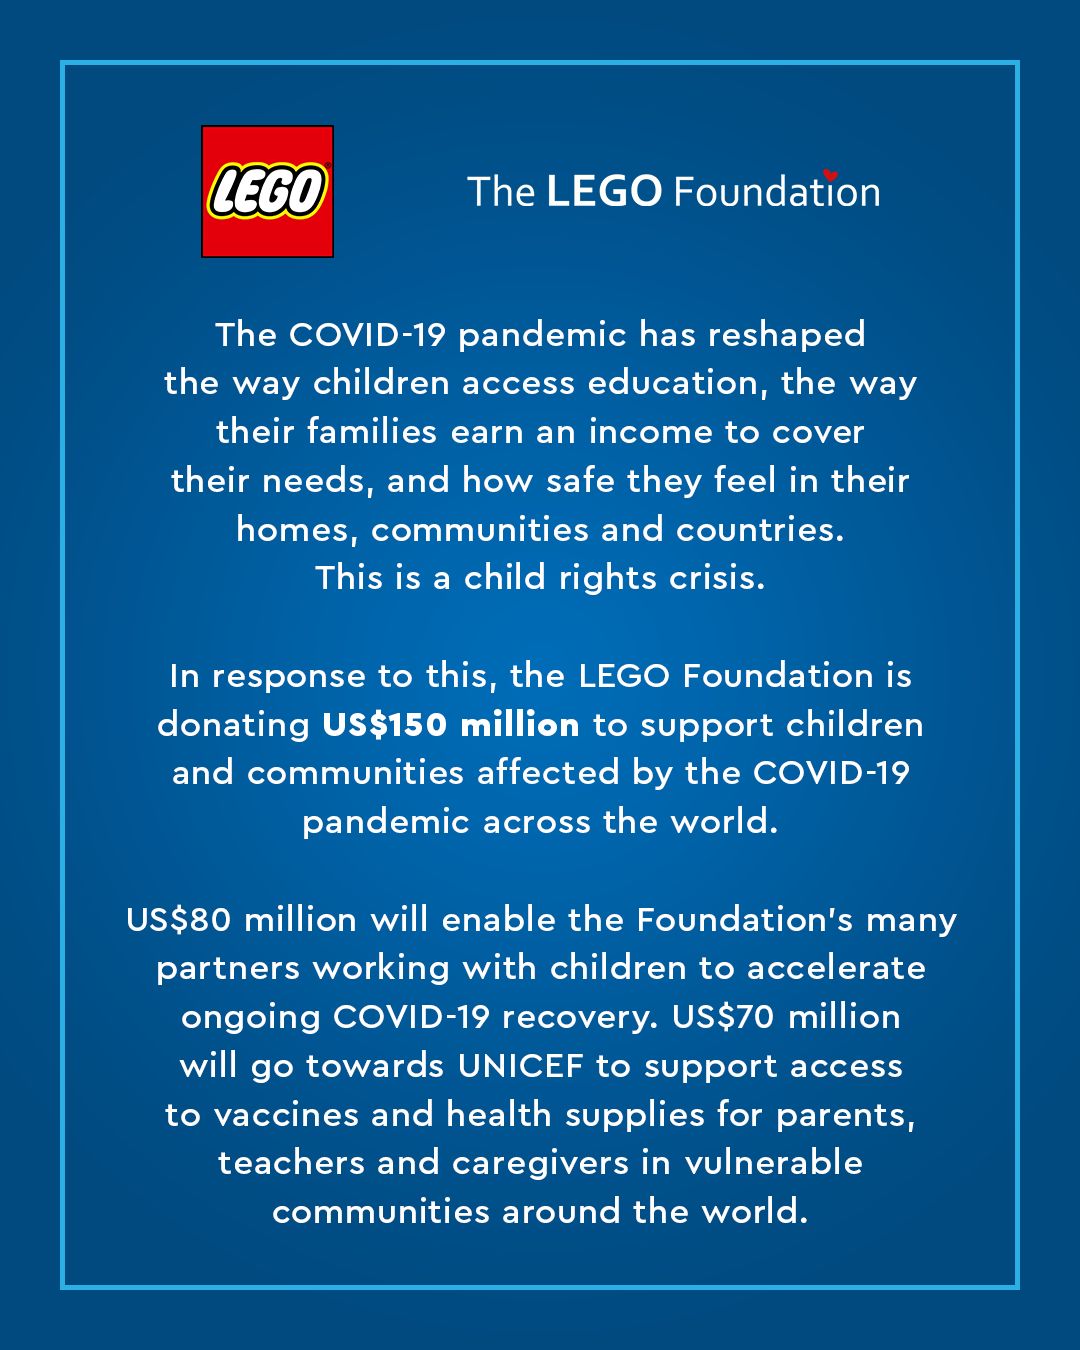 lego foundation